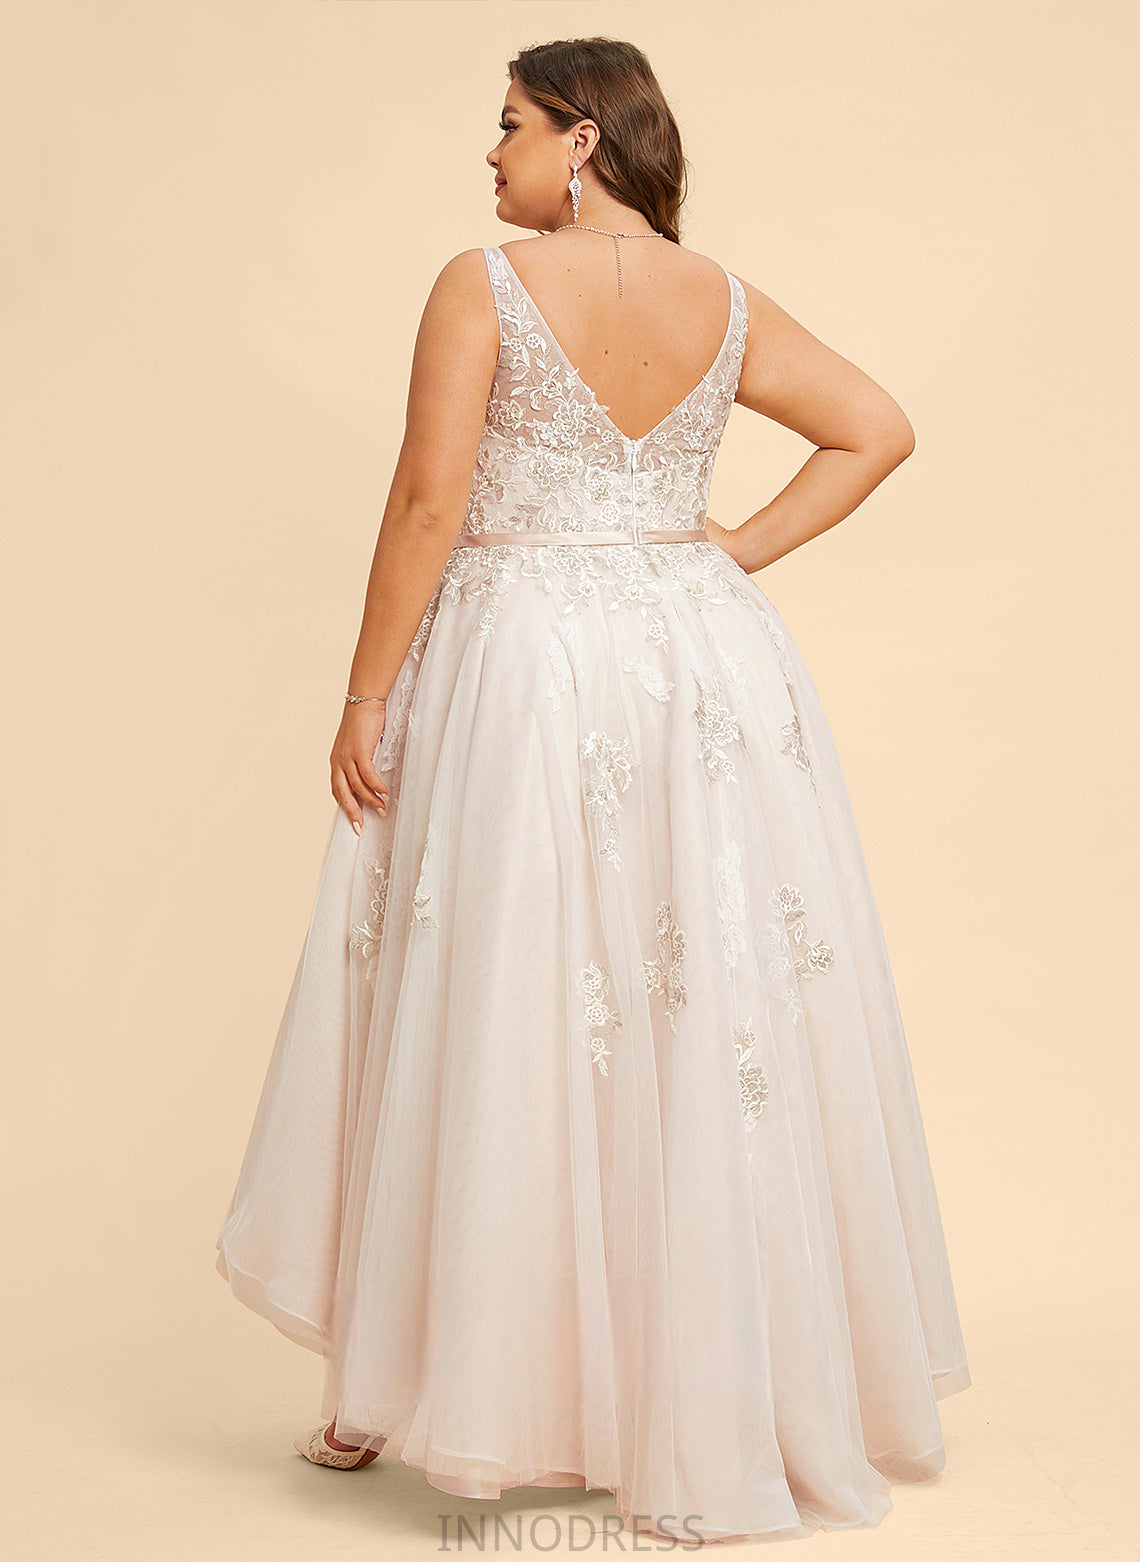 Bow(s) Carolina Asymmetrical Tulle V-neck Wedding Wedding Dresses Satin A-Line Dress With Lace